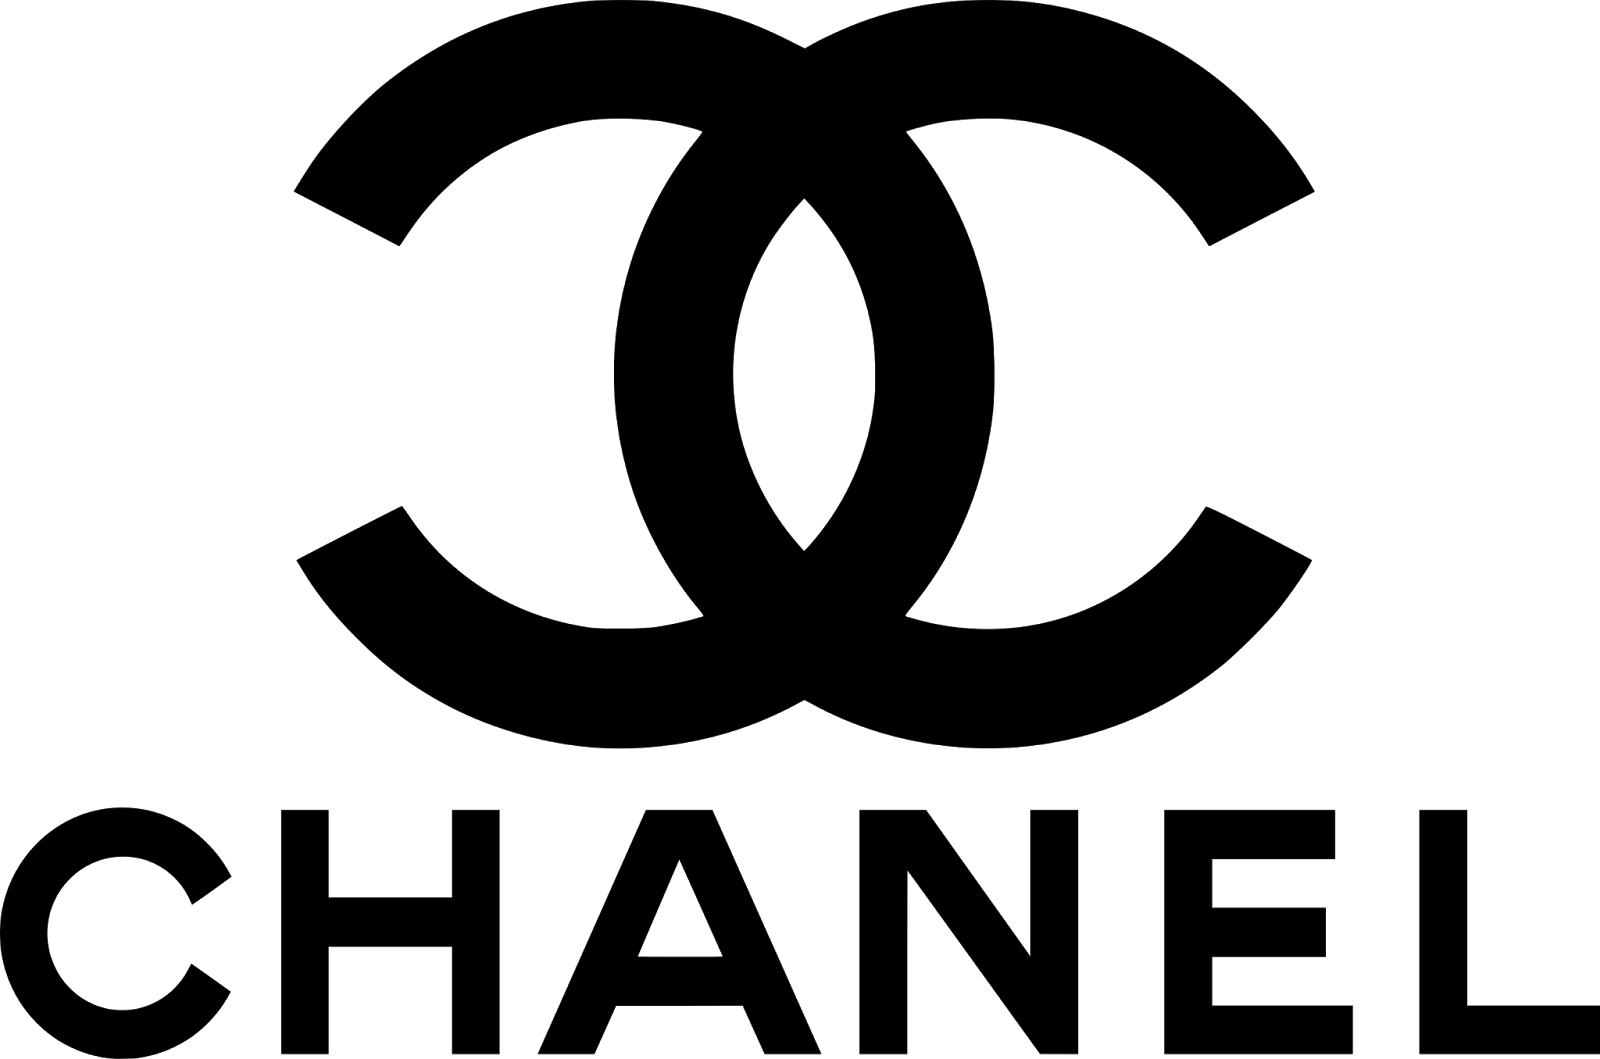 Logo Supreme Chanel PNG Image High Quality PNG Image